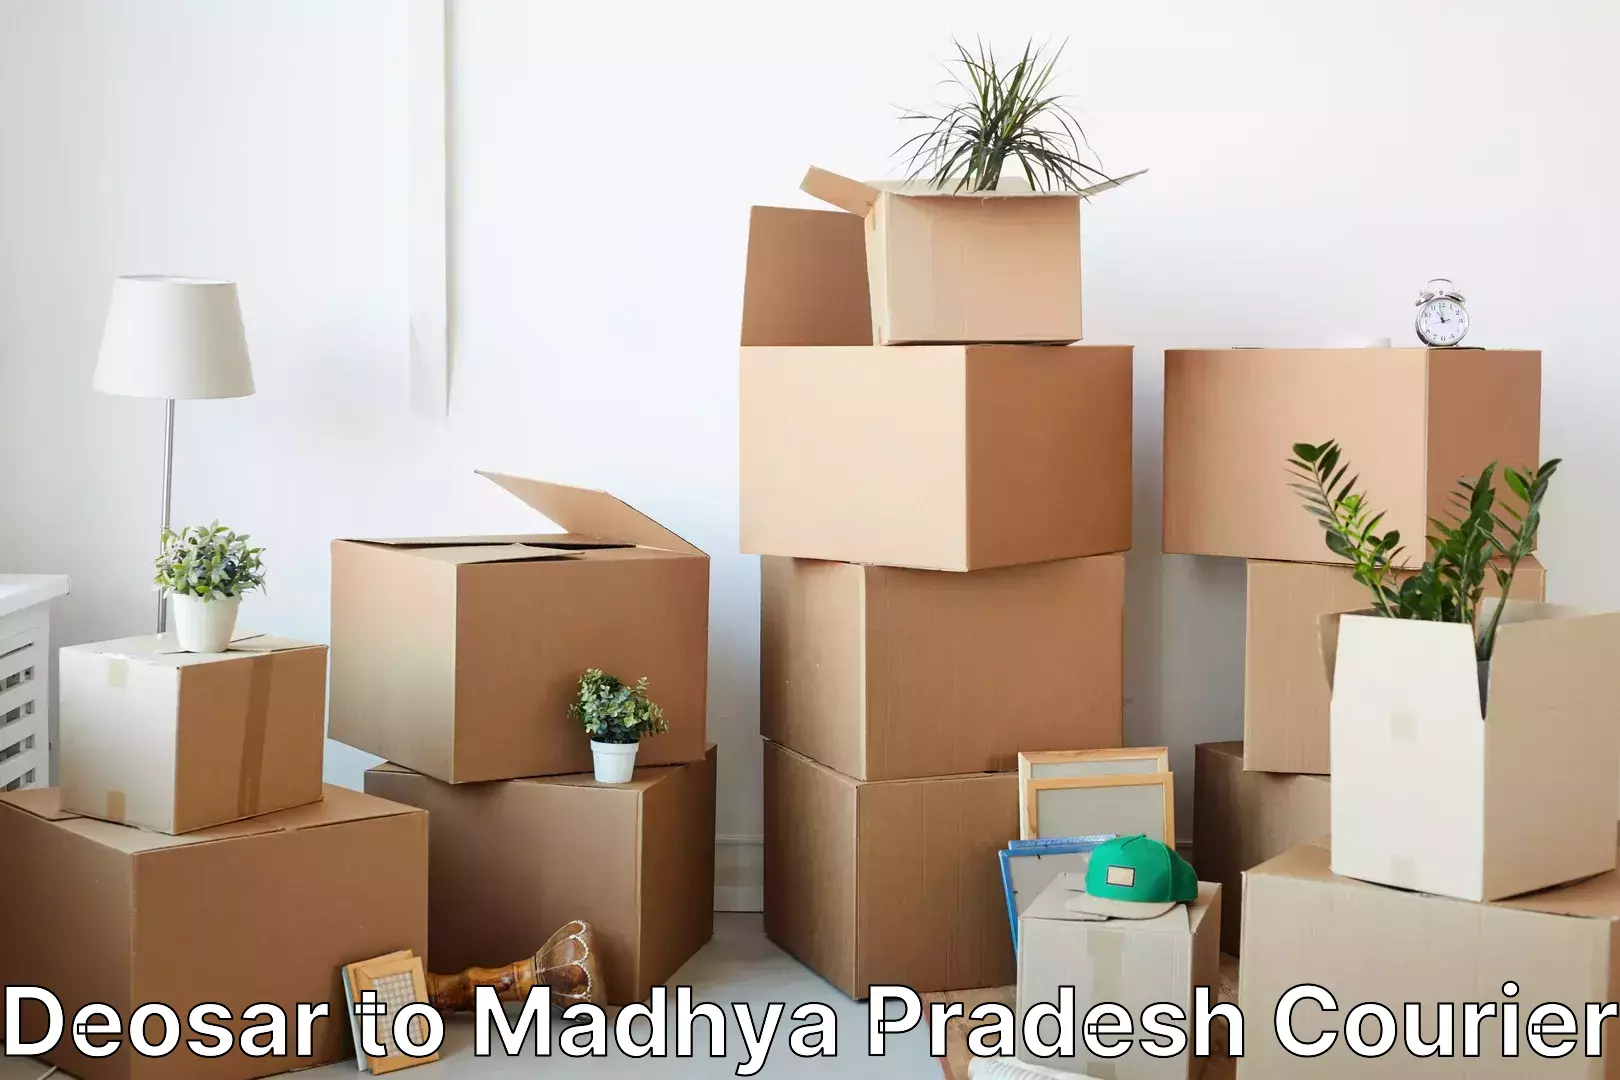 Global shipping networks Deosar to Madhya Pradesh